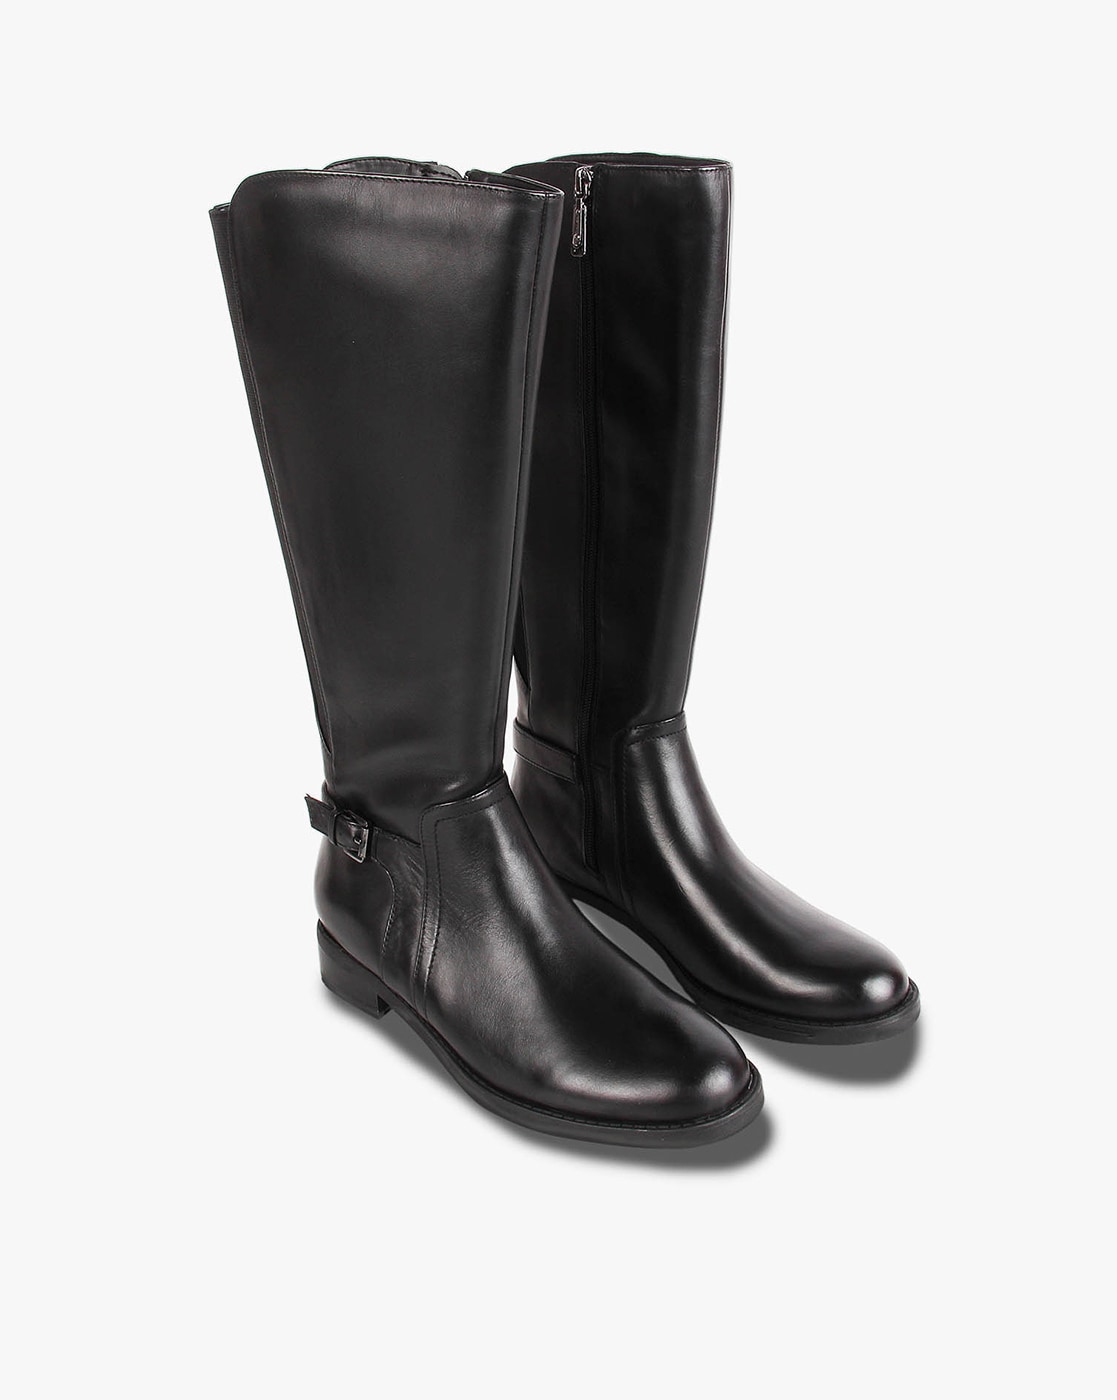 ladies calf length black boots